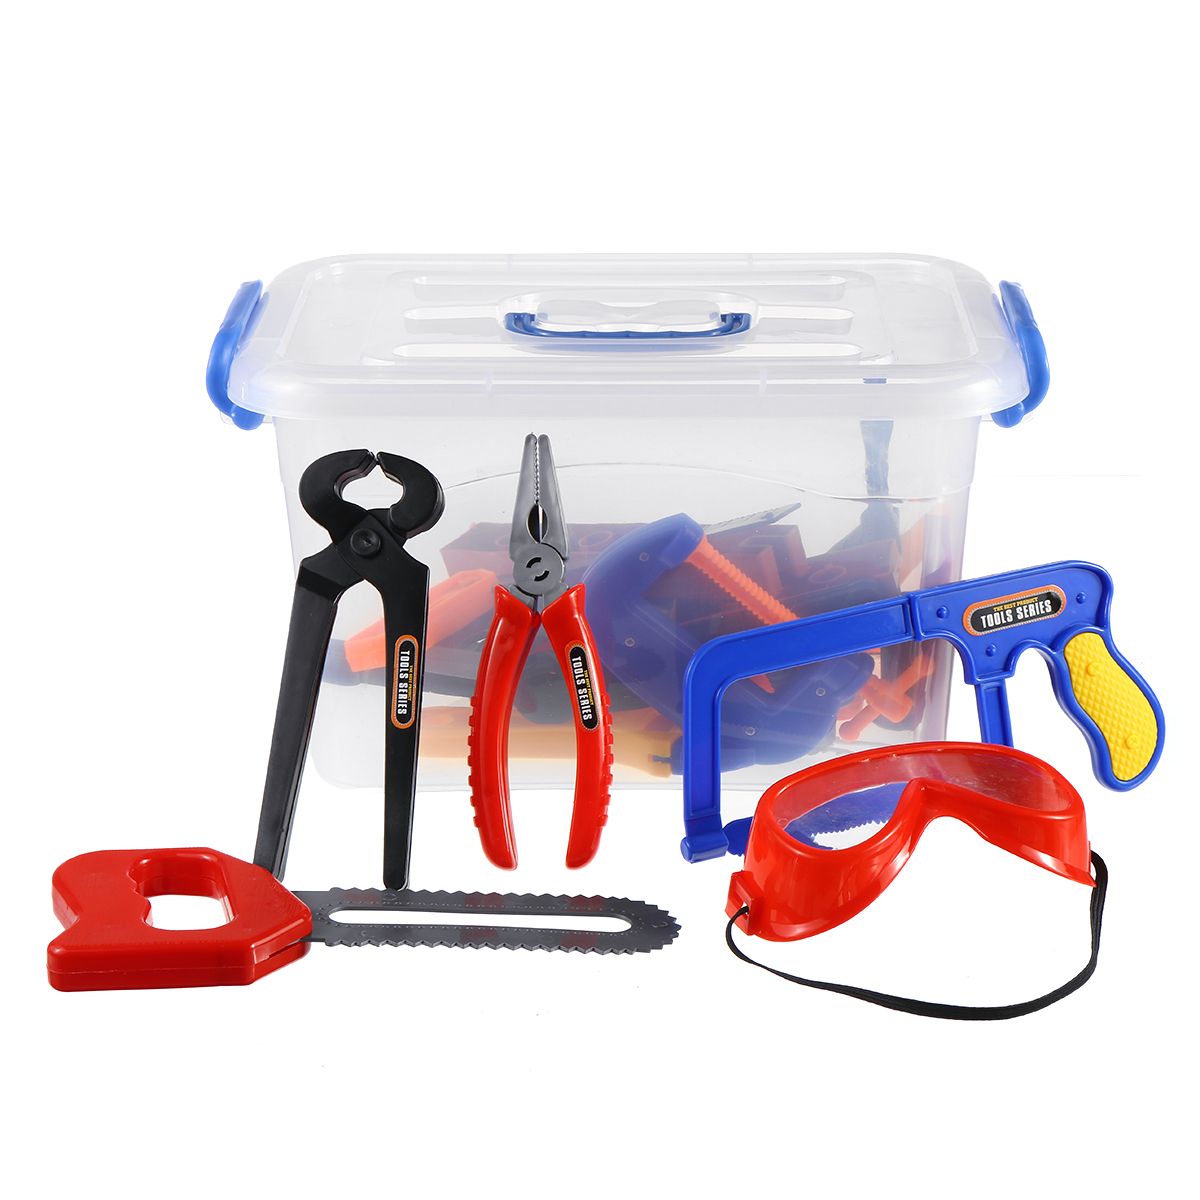 Childrens-Toolbox-Baby-Simulation-Repair-Tool-Electric-Drill-Screwdriver-Repair-Tool-Toy-Set-Boy-Kid-1641269